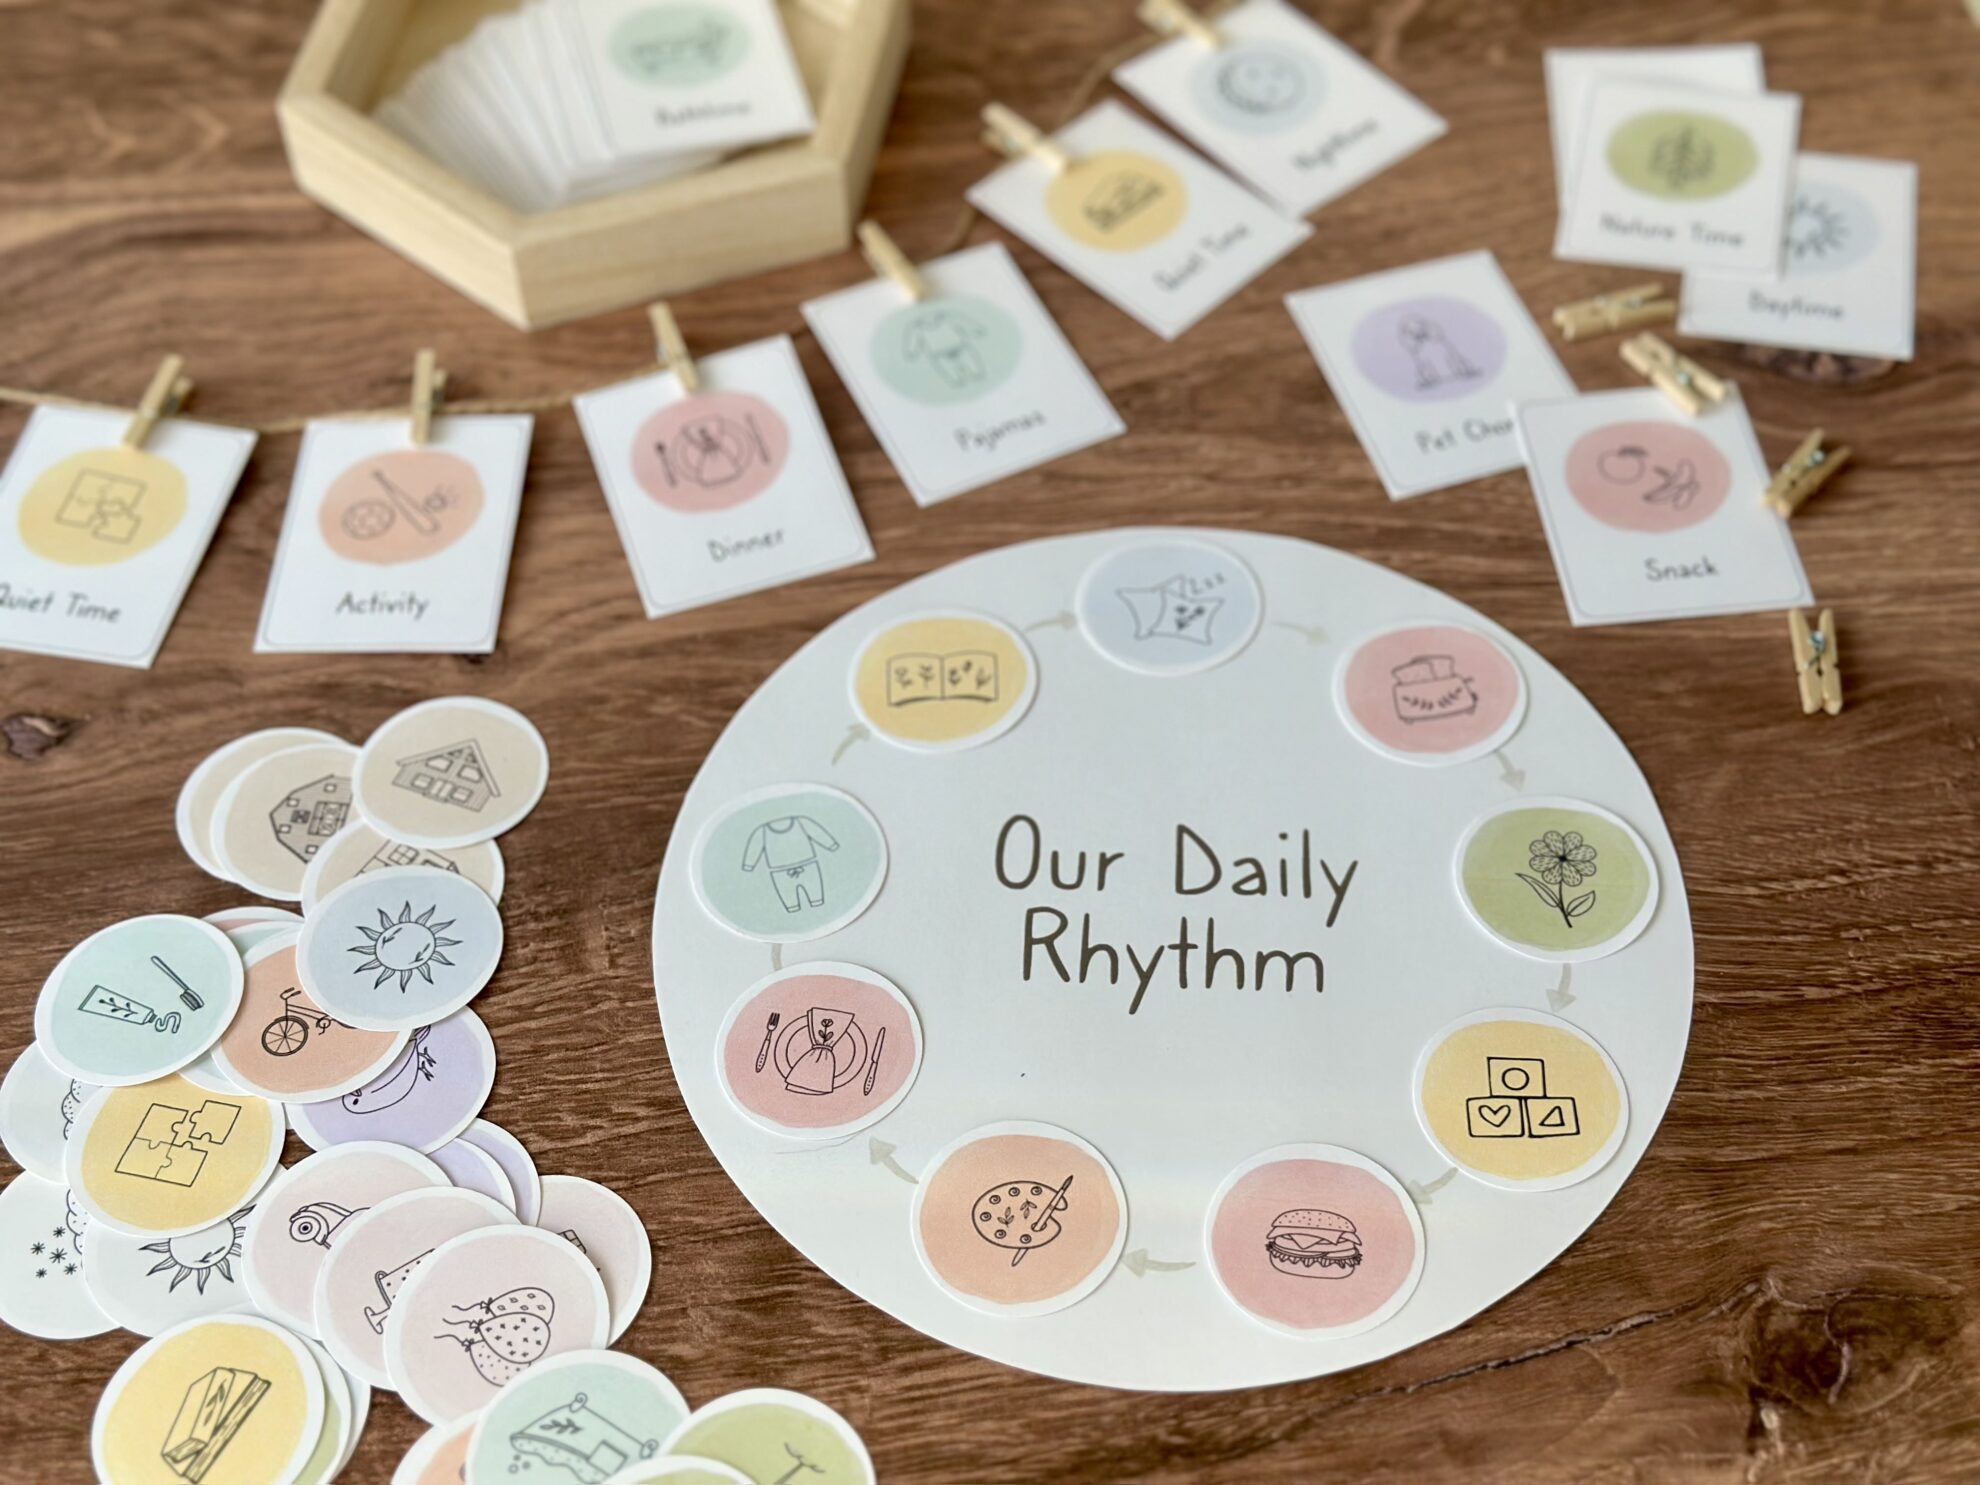 Printable Daily Rhythm Wheel & Cards